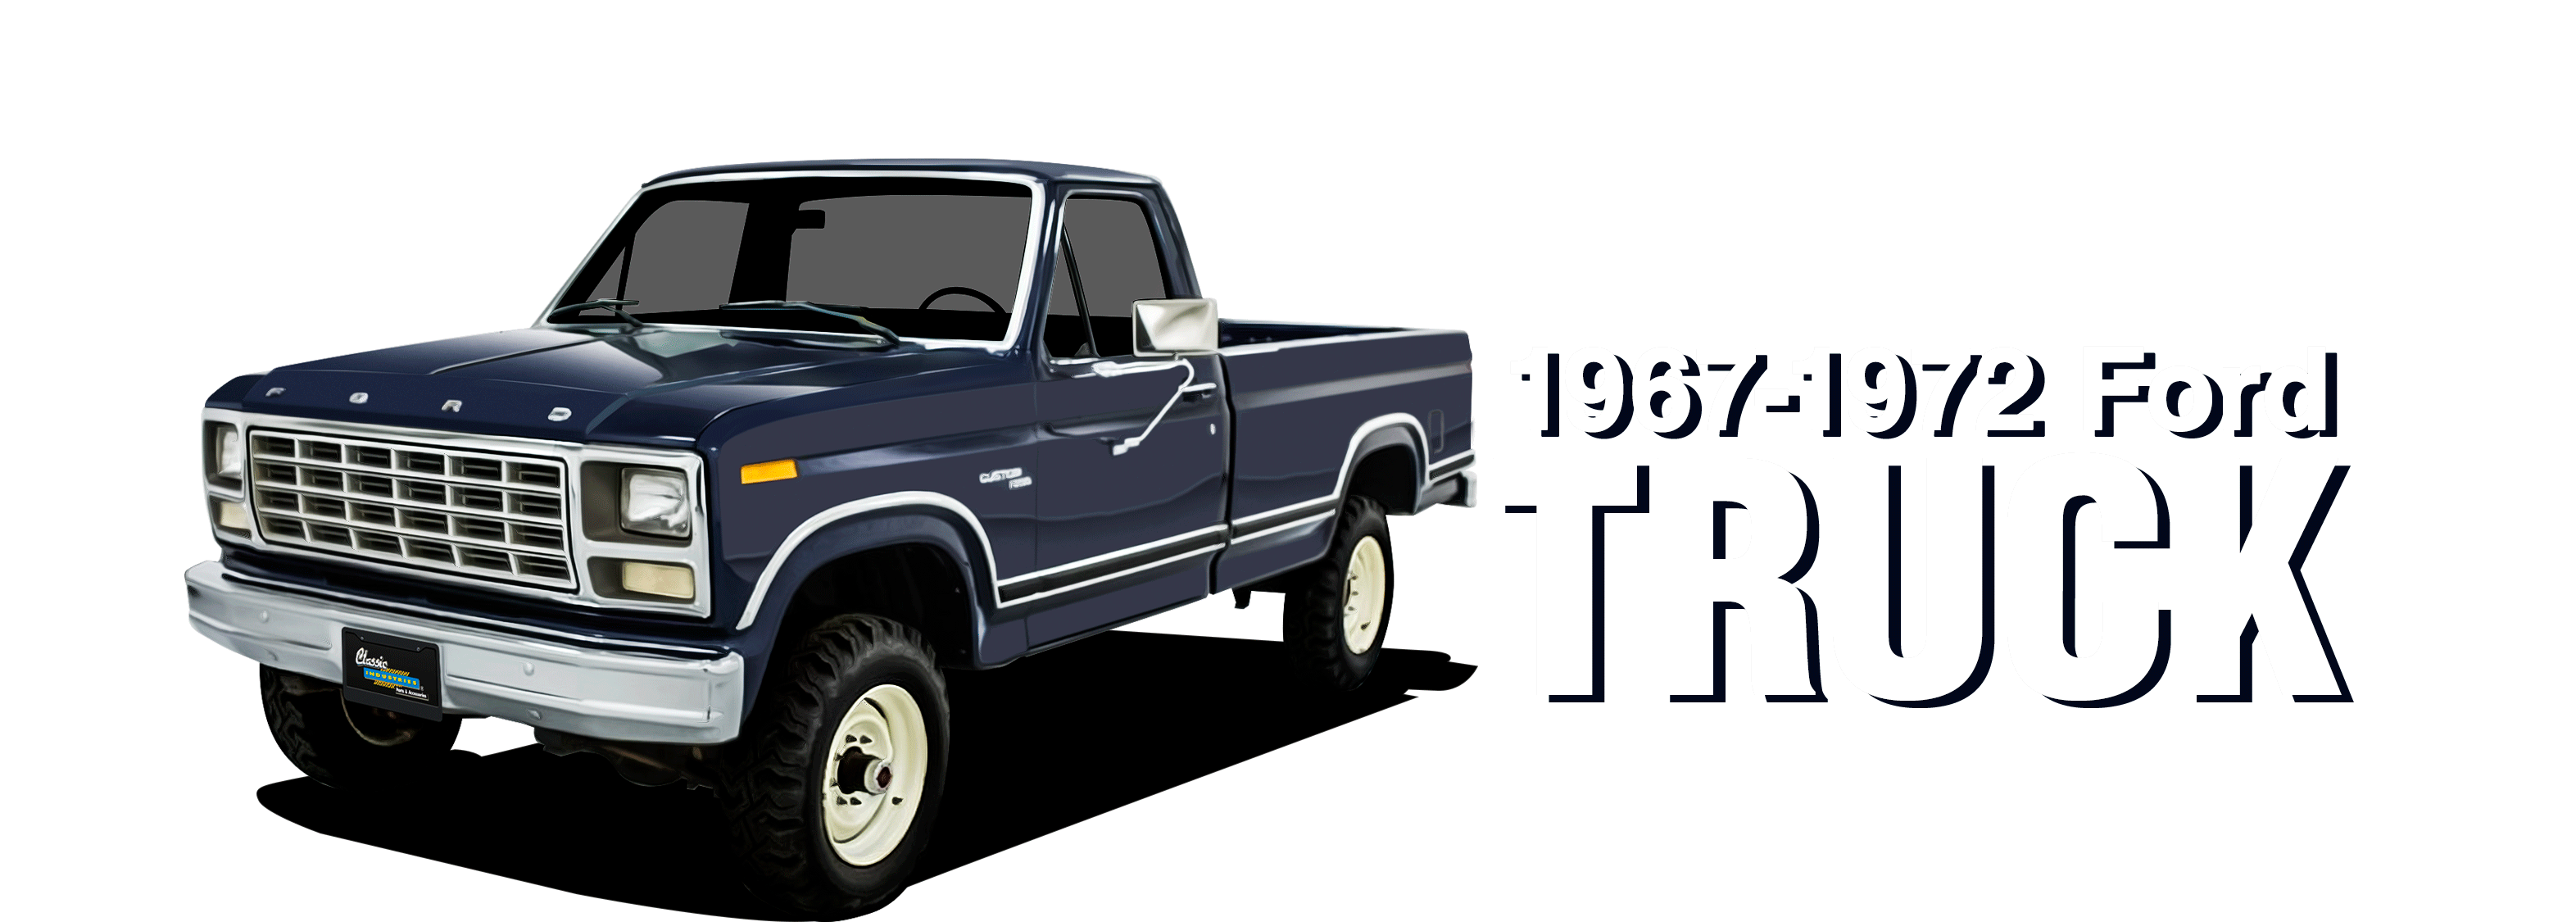 67-72FordTruck-vehicle-desktop